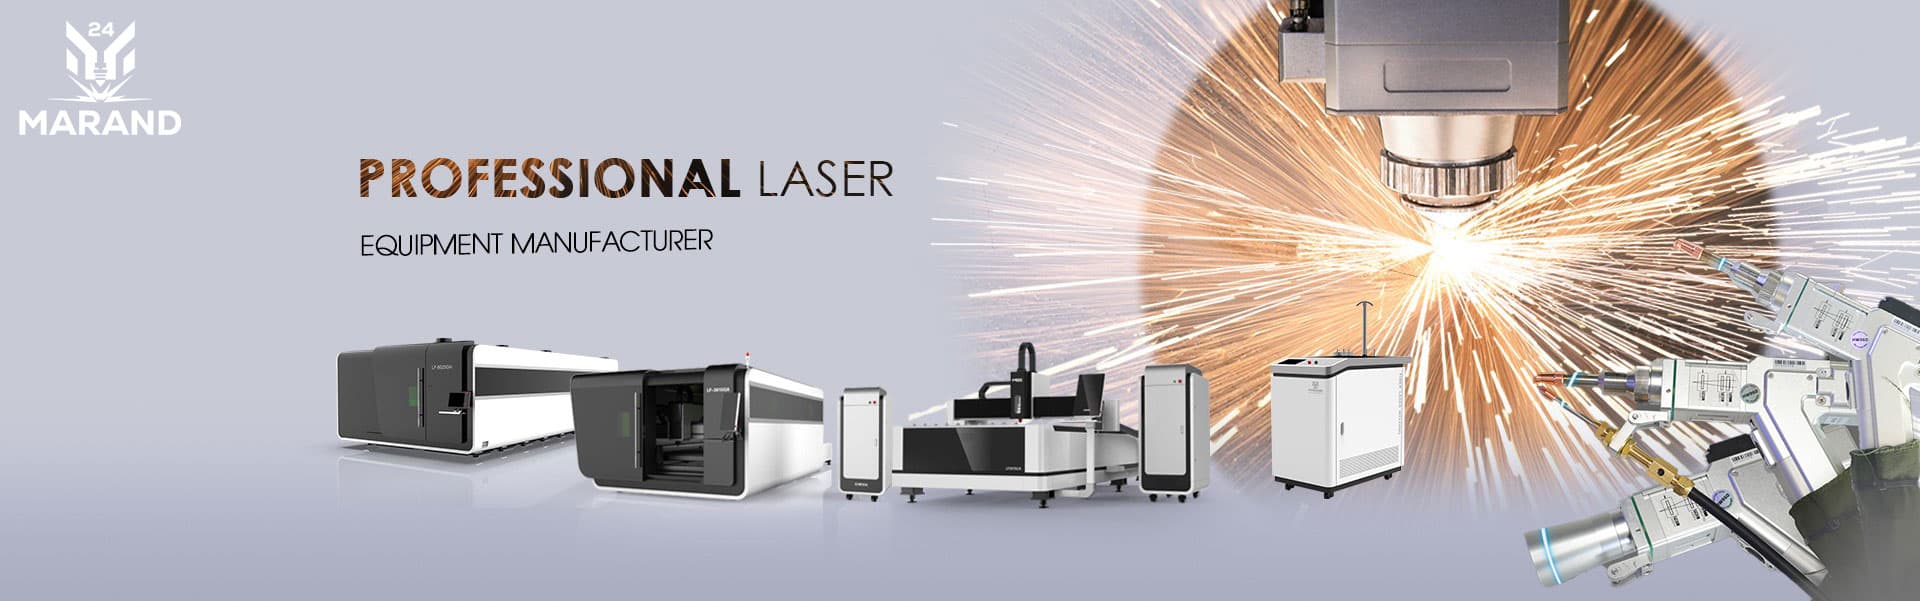 Professional Laser